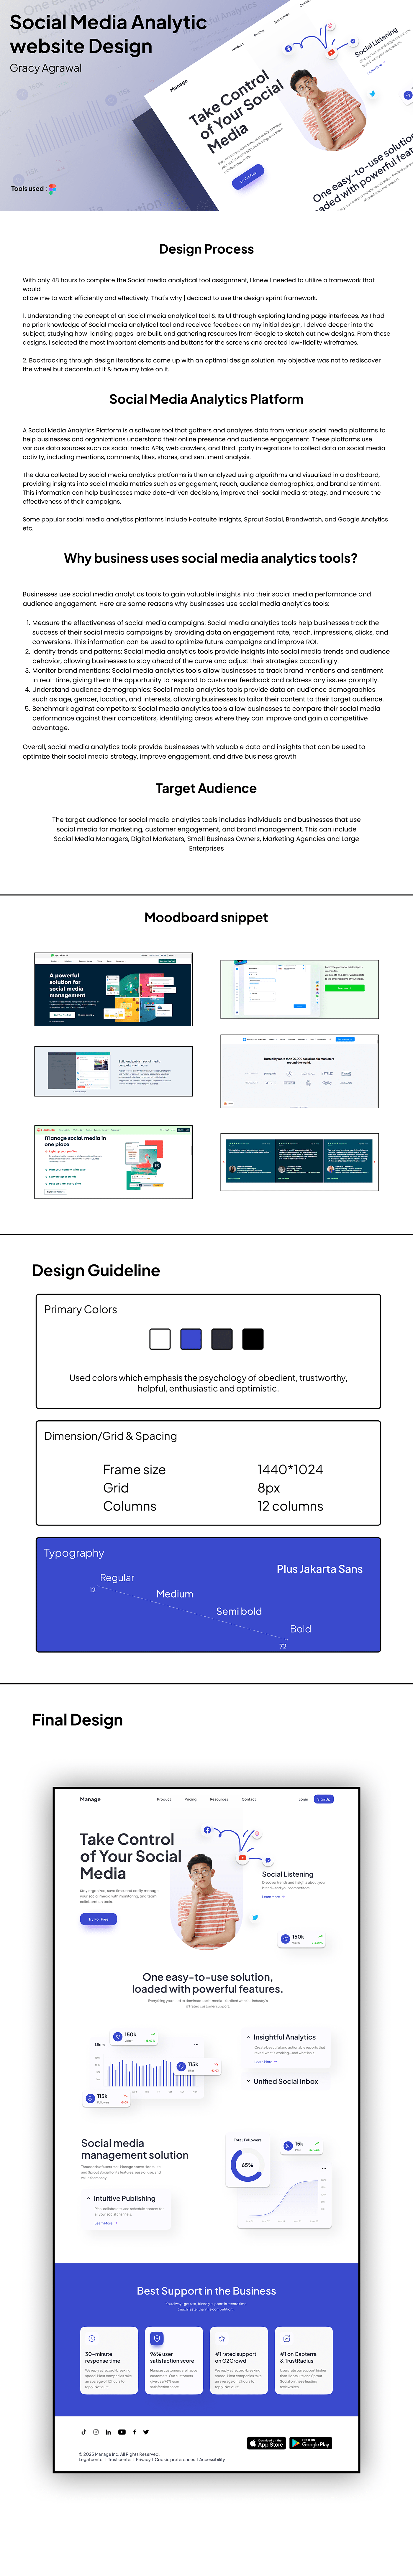 uiuxdesign data visualization social media analytics Website landing page ui design Creative Design Technology behance portfolio